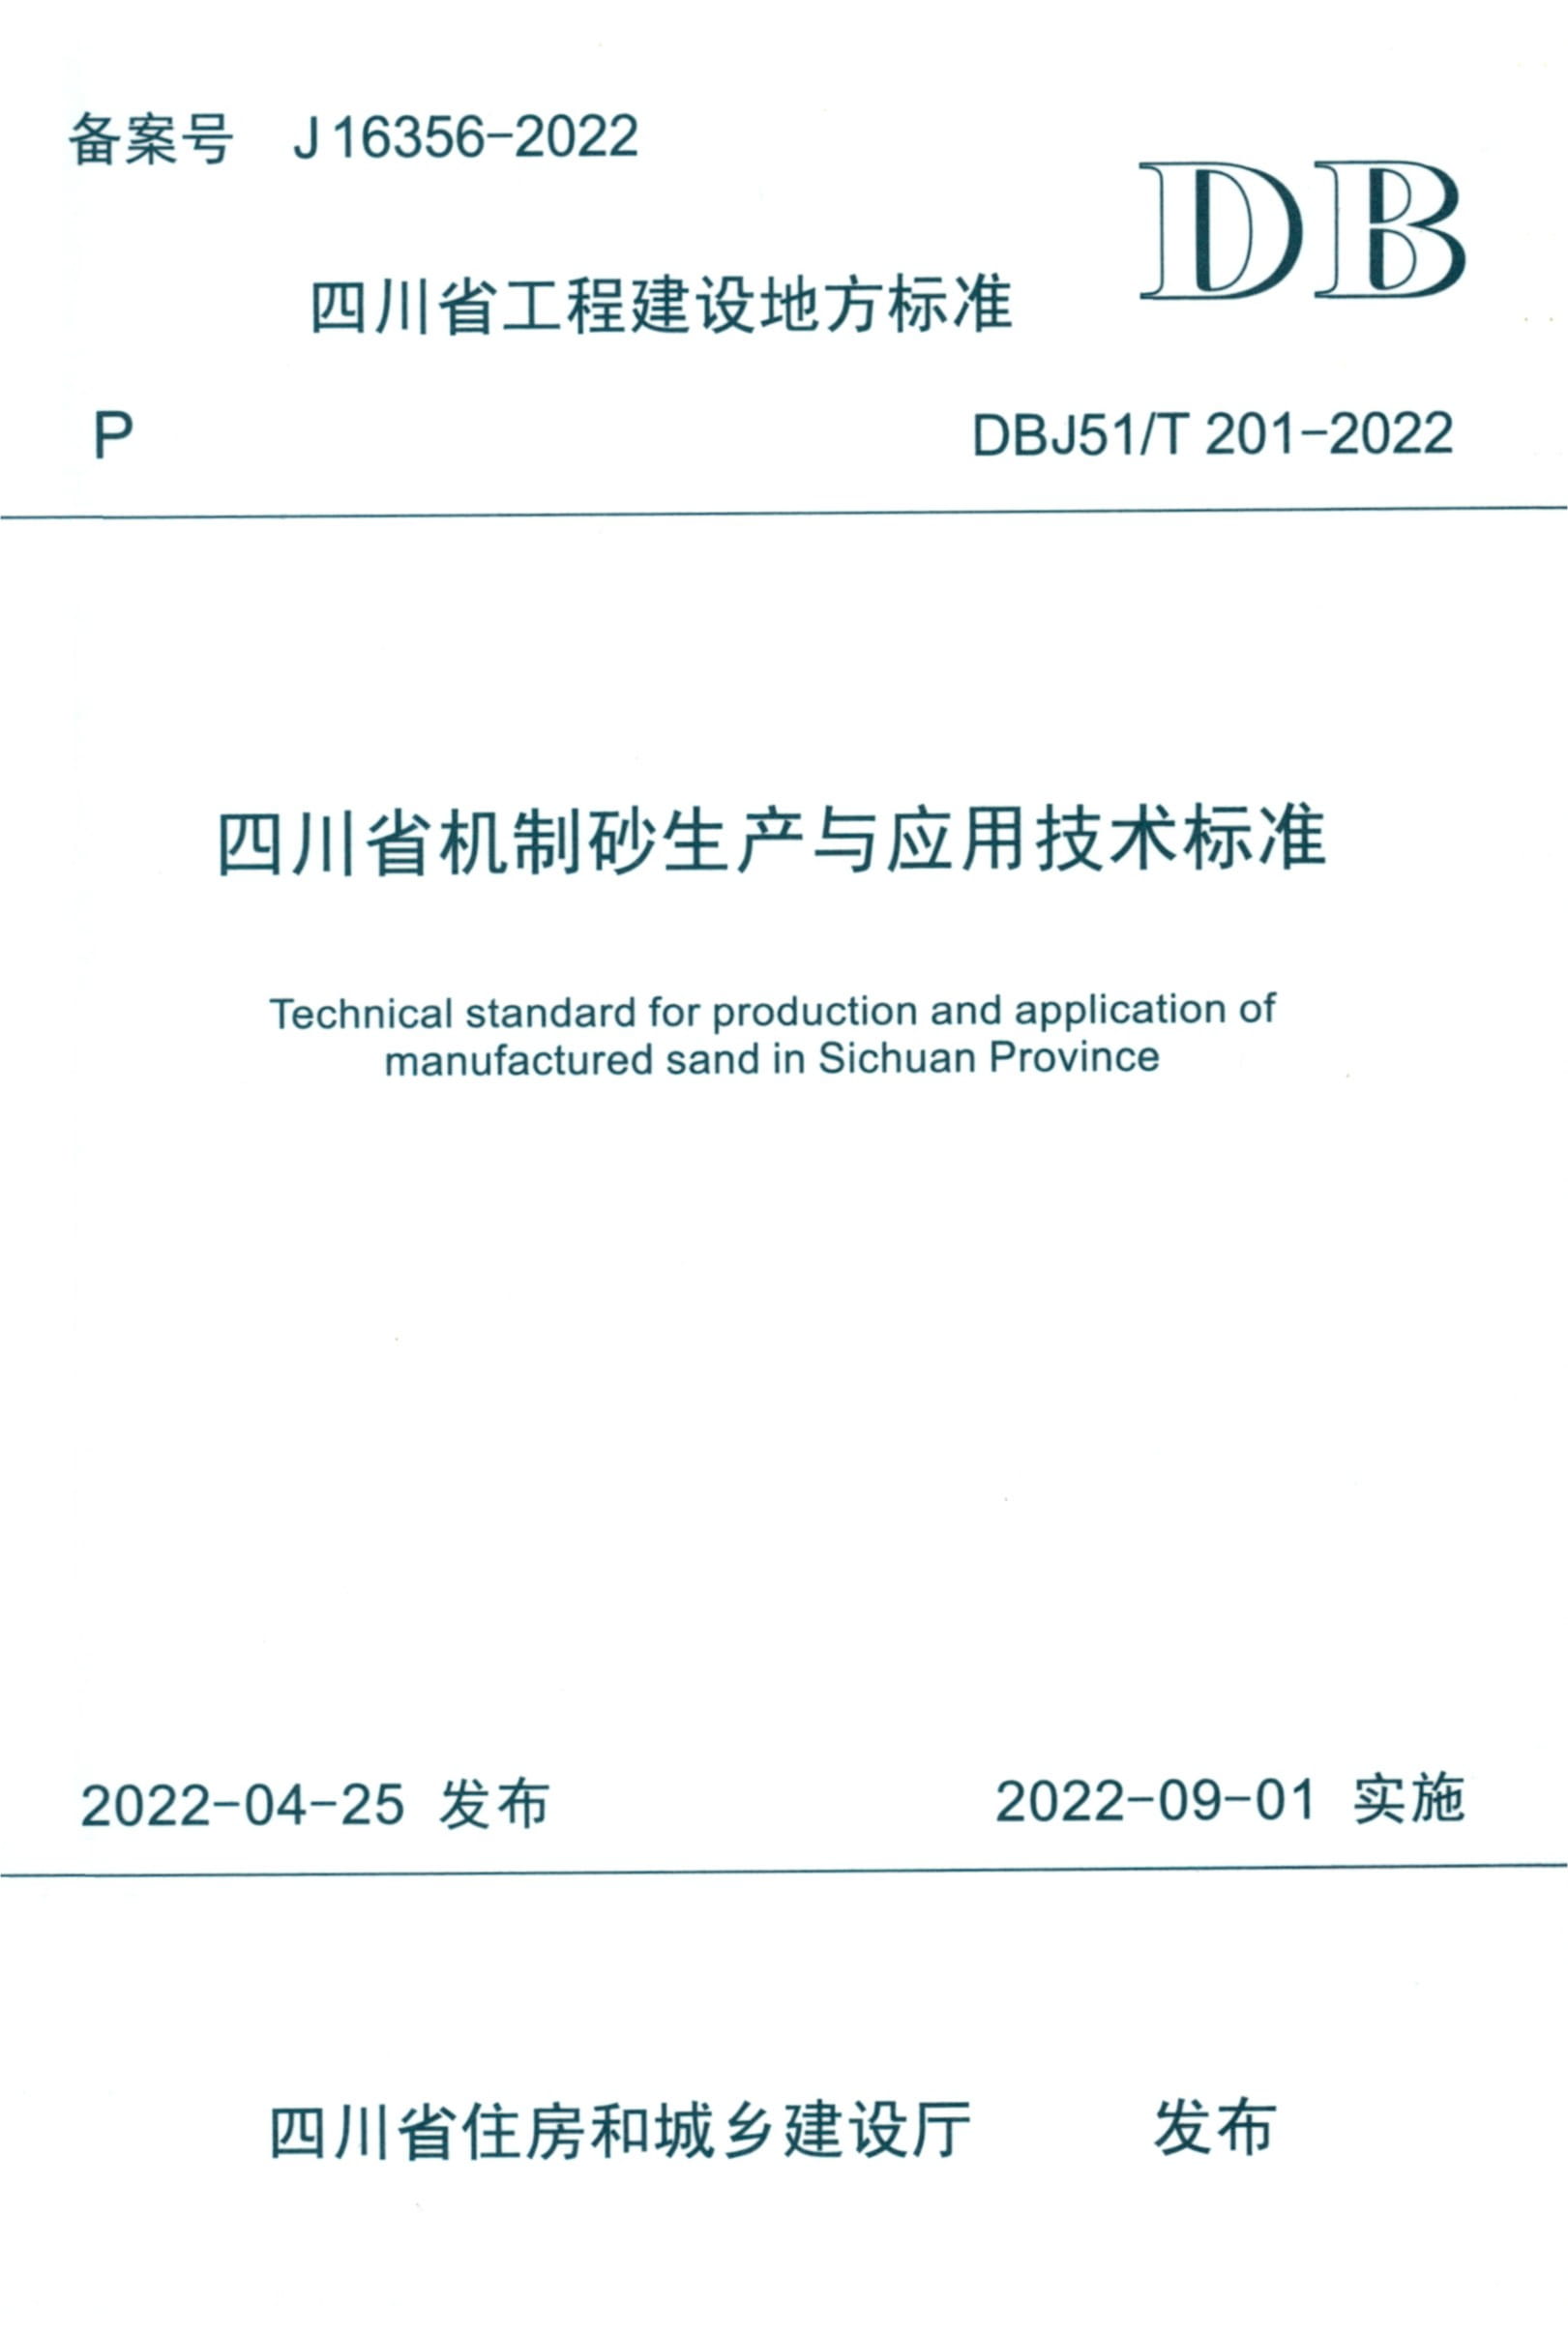 DBJ51/T 201-2022 四川省机制砂生产与应用技术标准